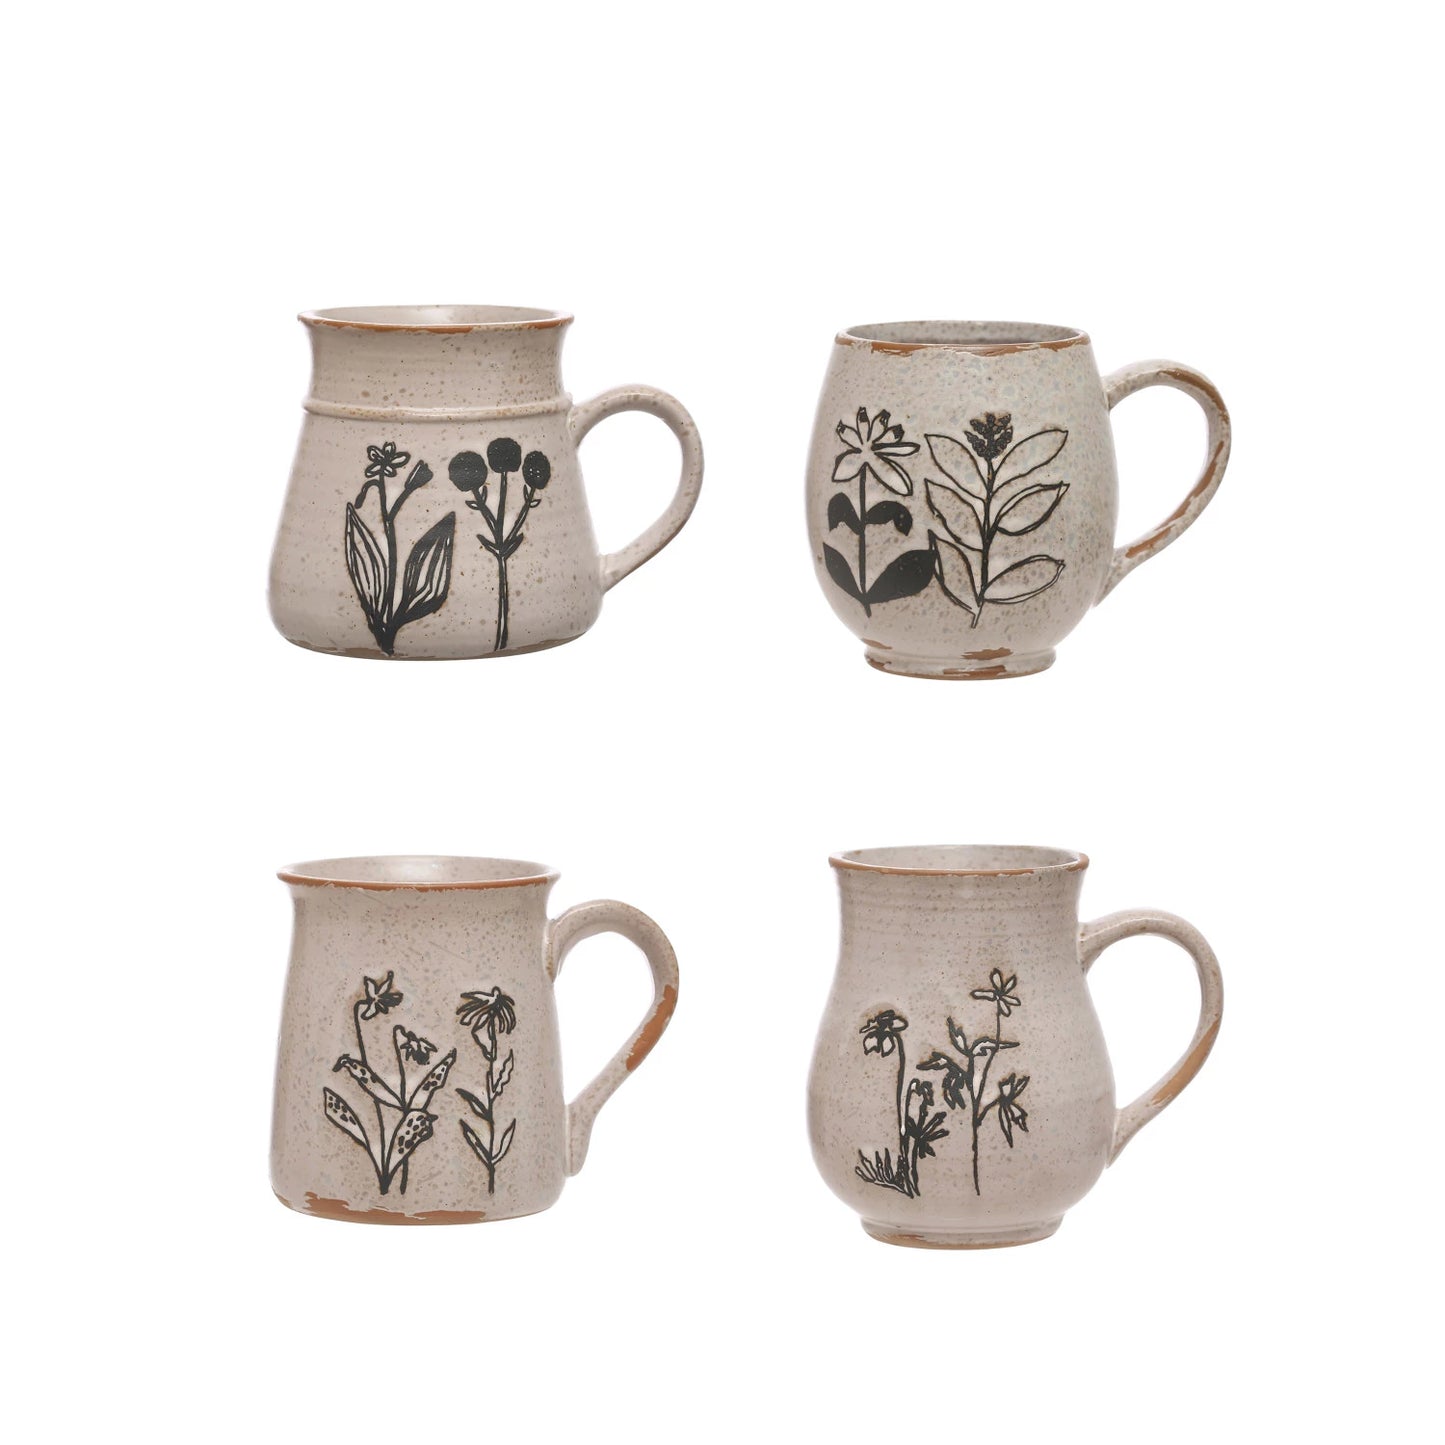 Debossed Stoneware Floral Mugs